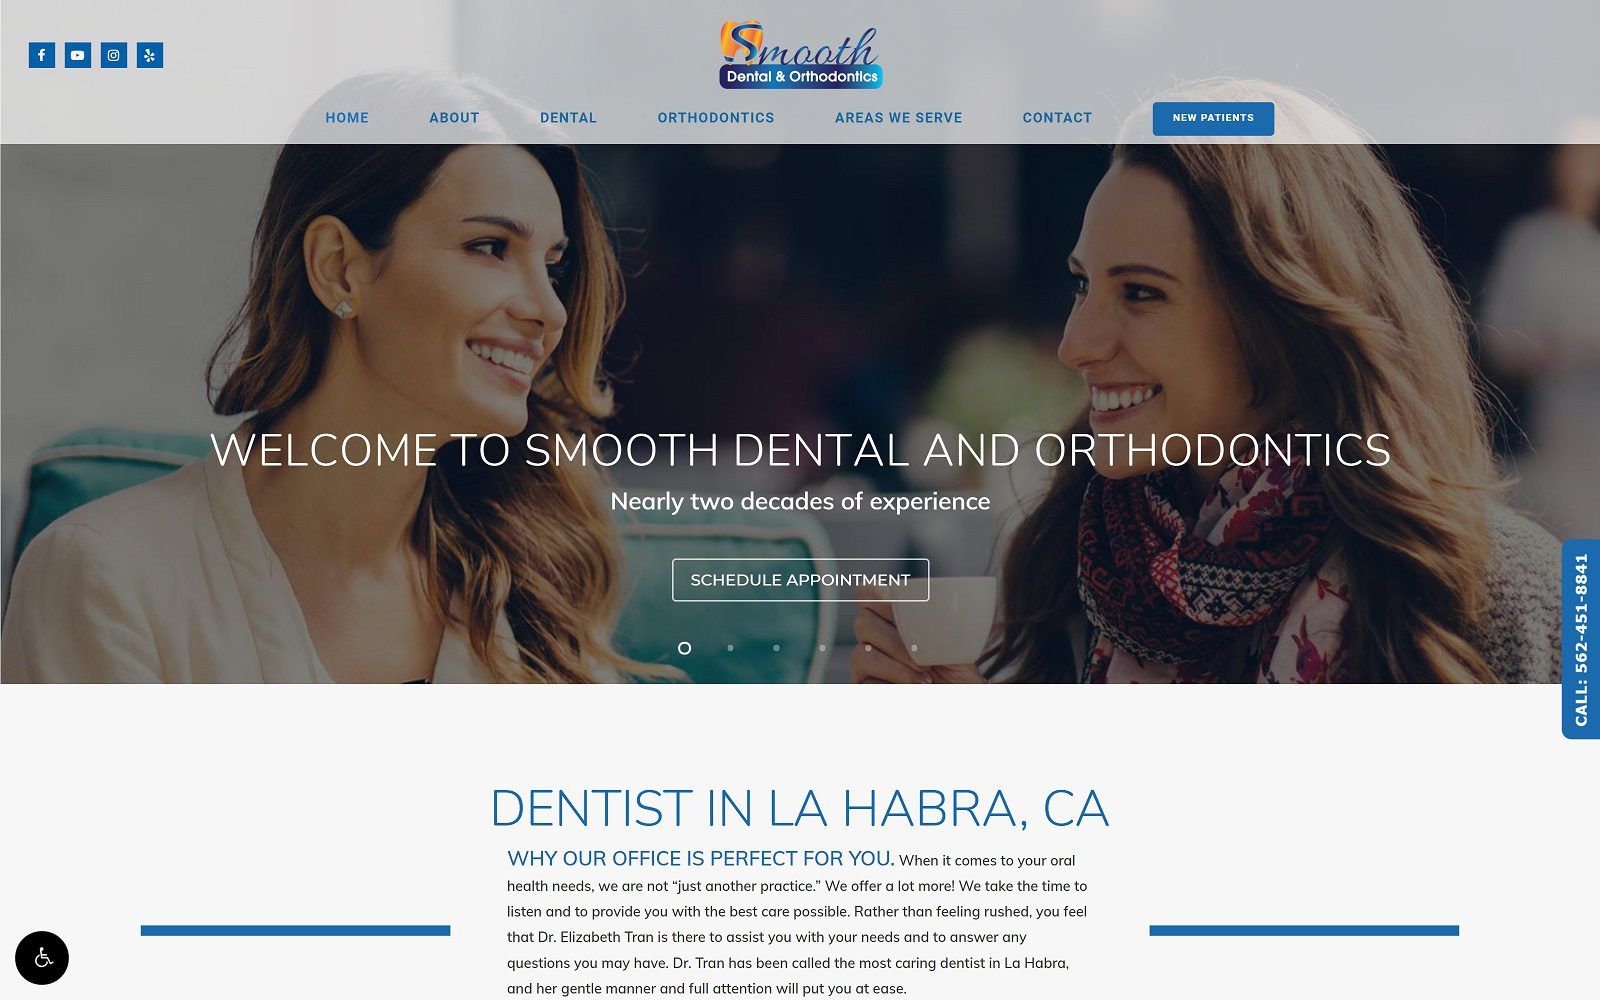 The screenshot of smooth dental and orthodontics dr. Elizabeth tran website